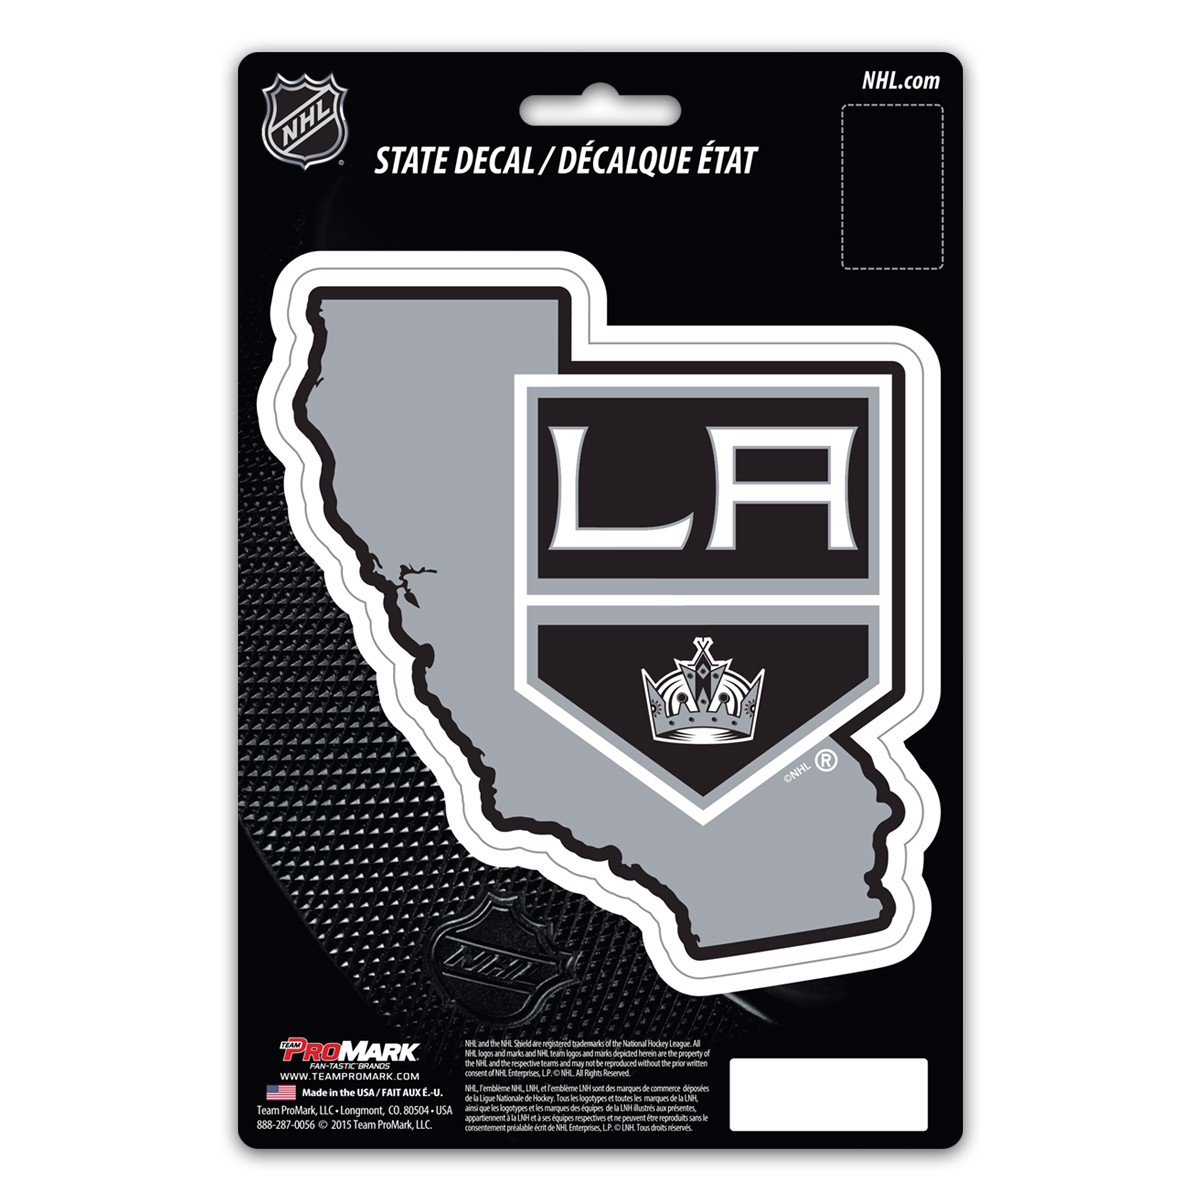 National Hockey League NHL sticker decal